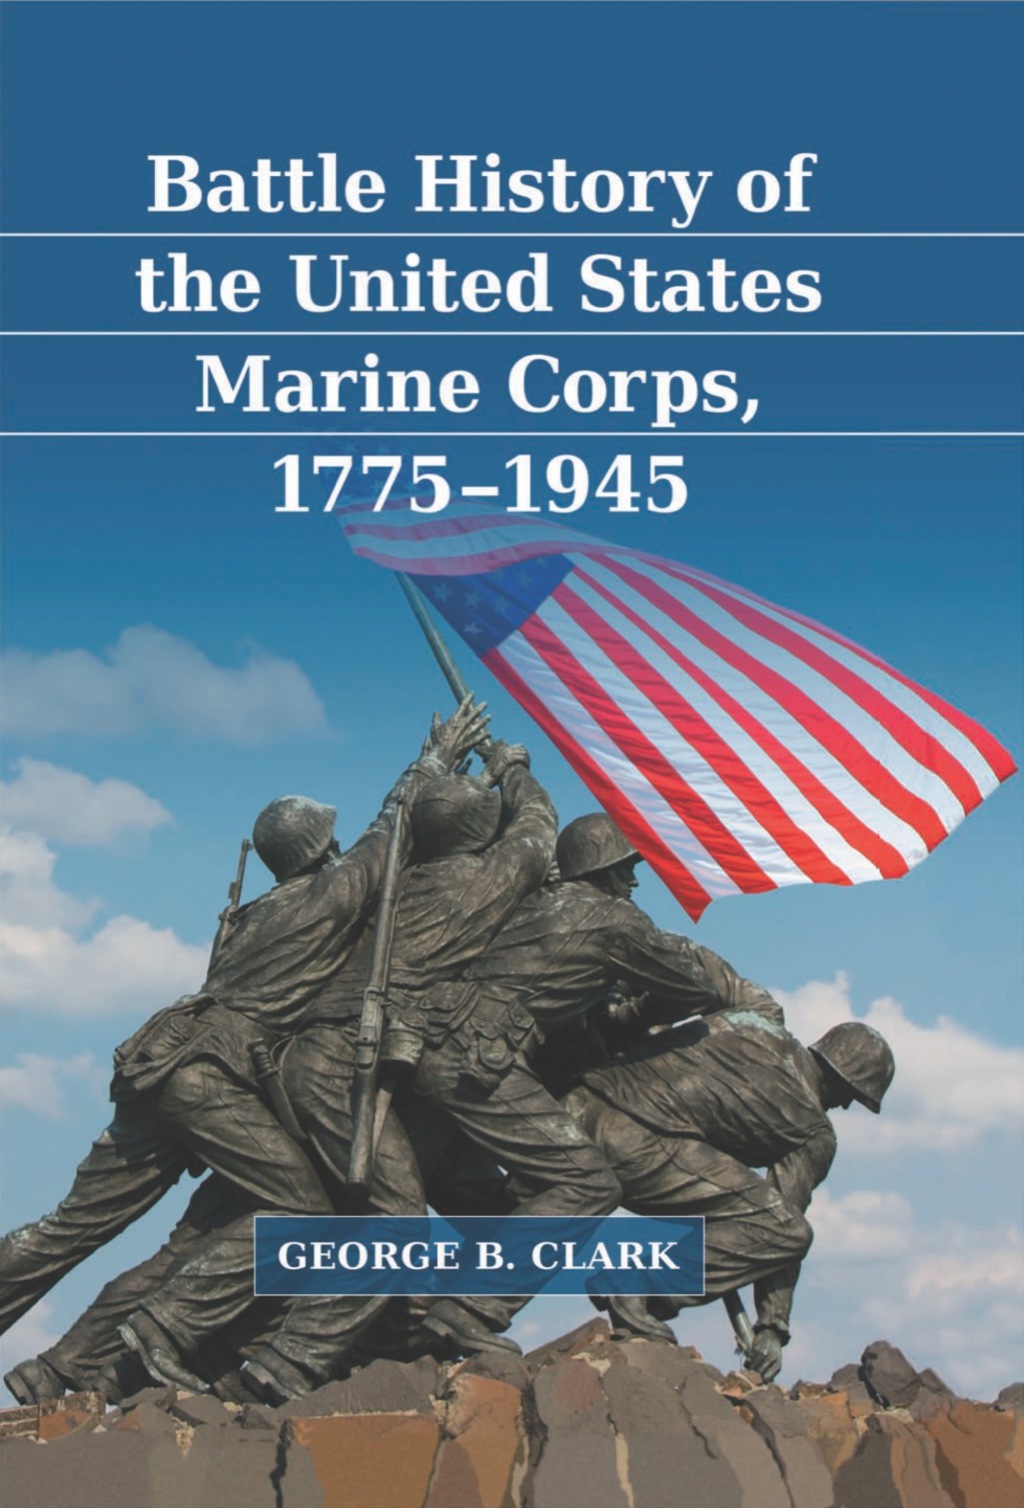 Battle History of the United States Marine Corps  1775-1945 (eBook) - George B. Clark,